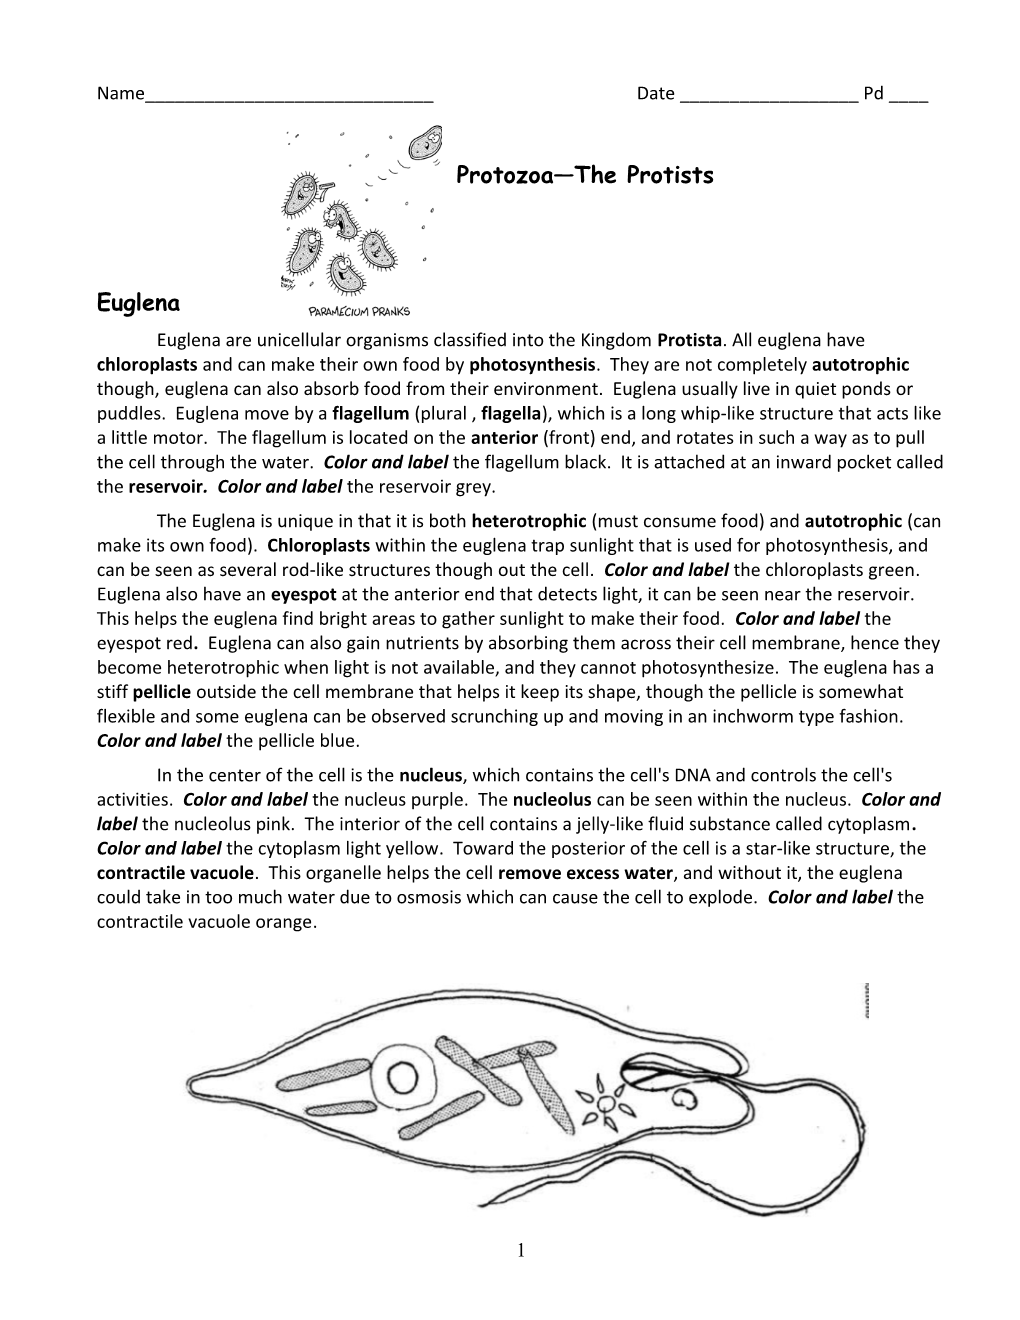 Protists the Protozoans Packet